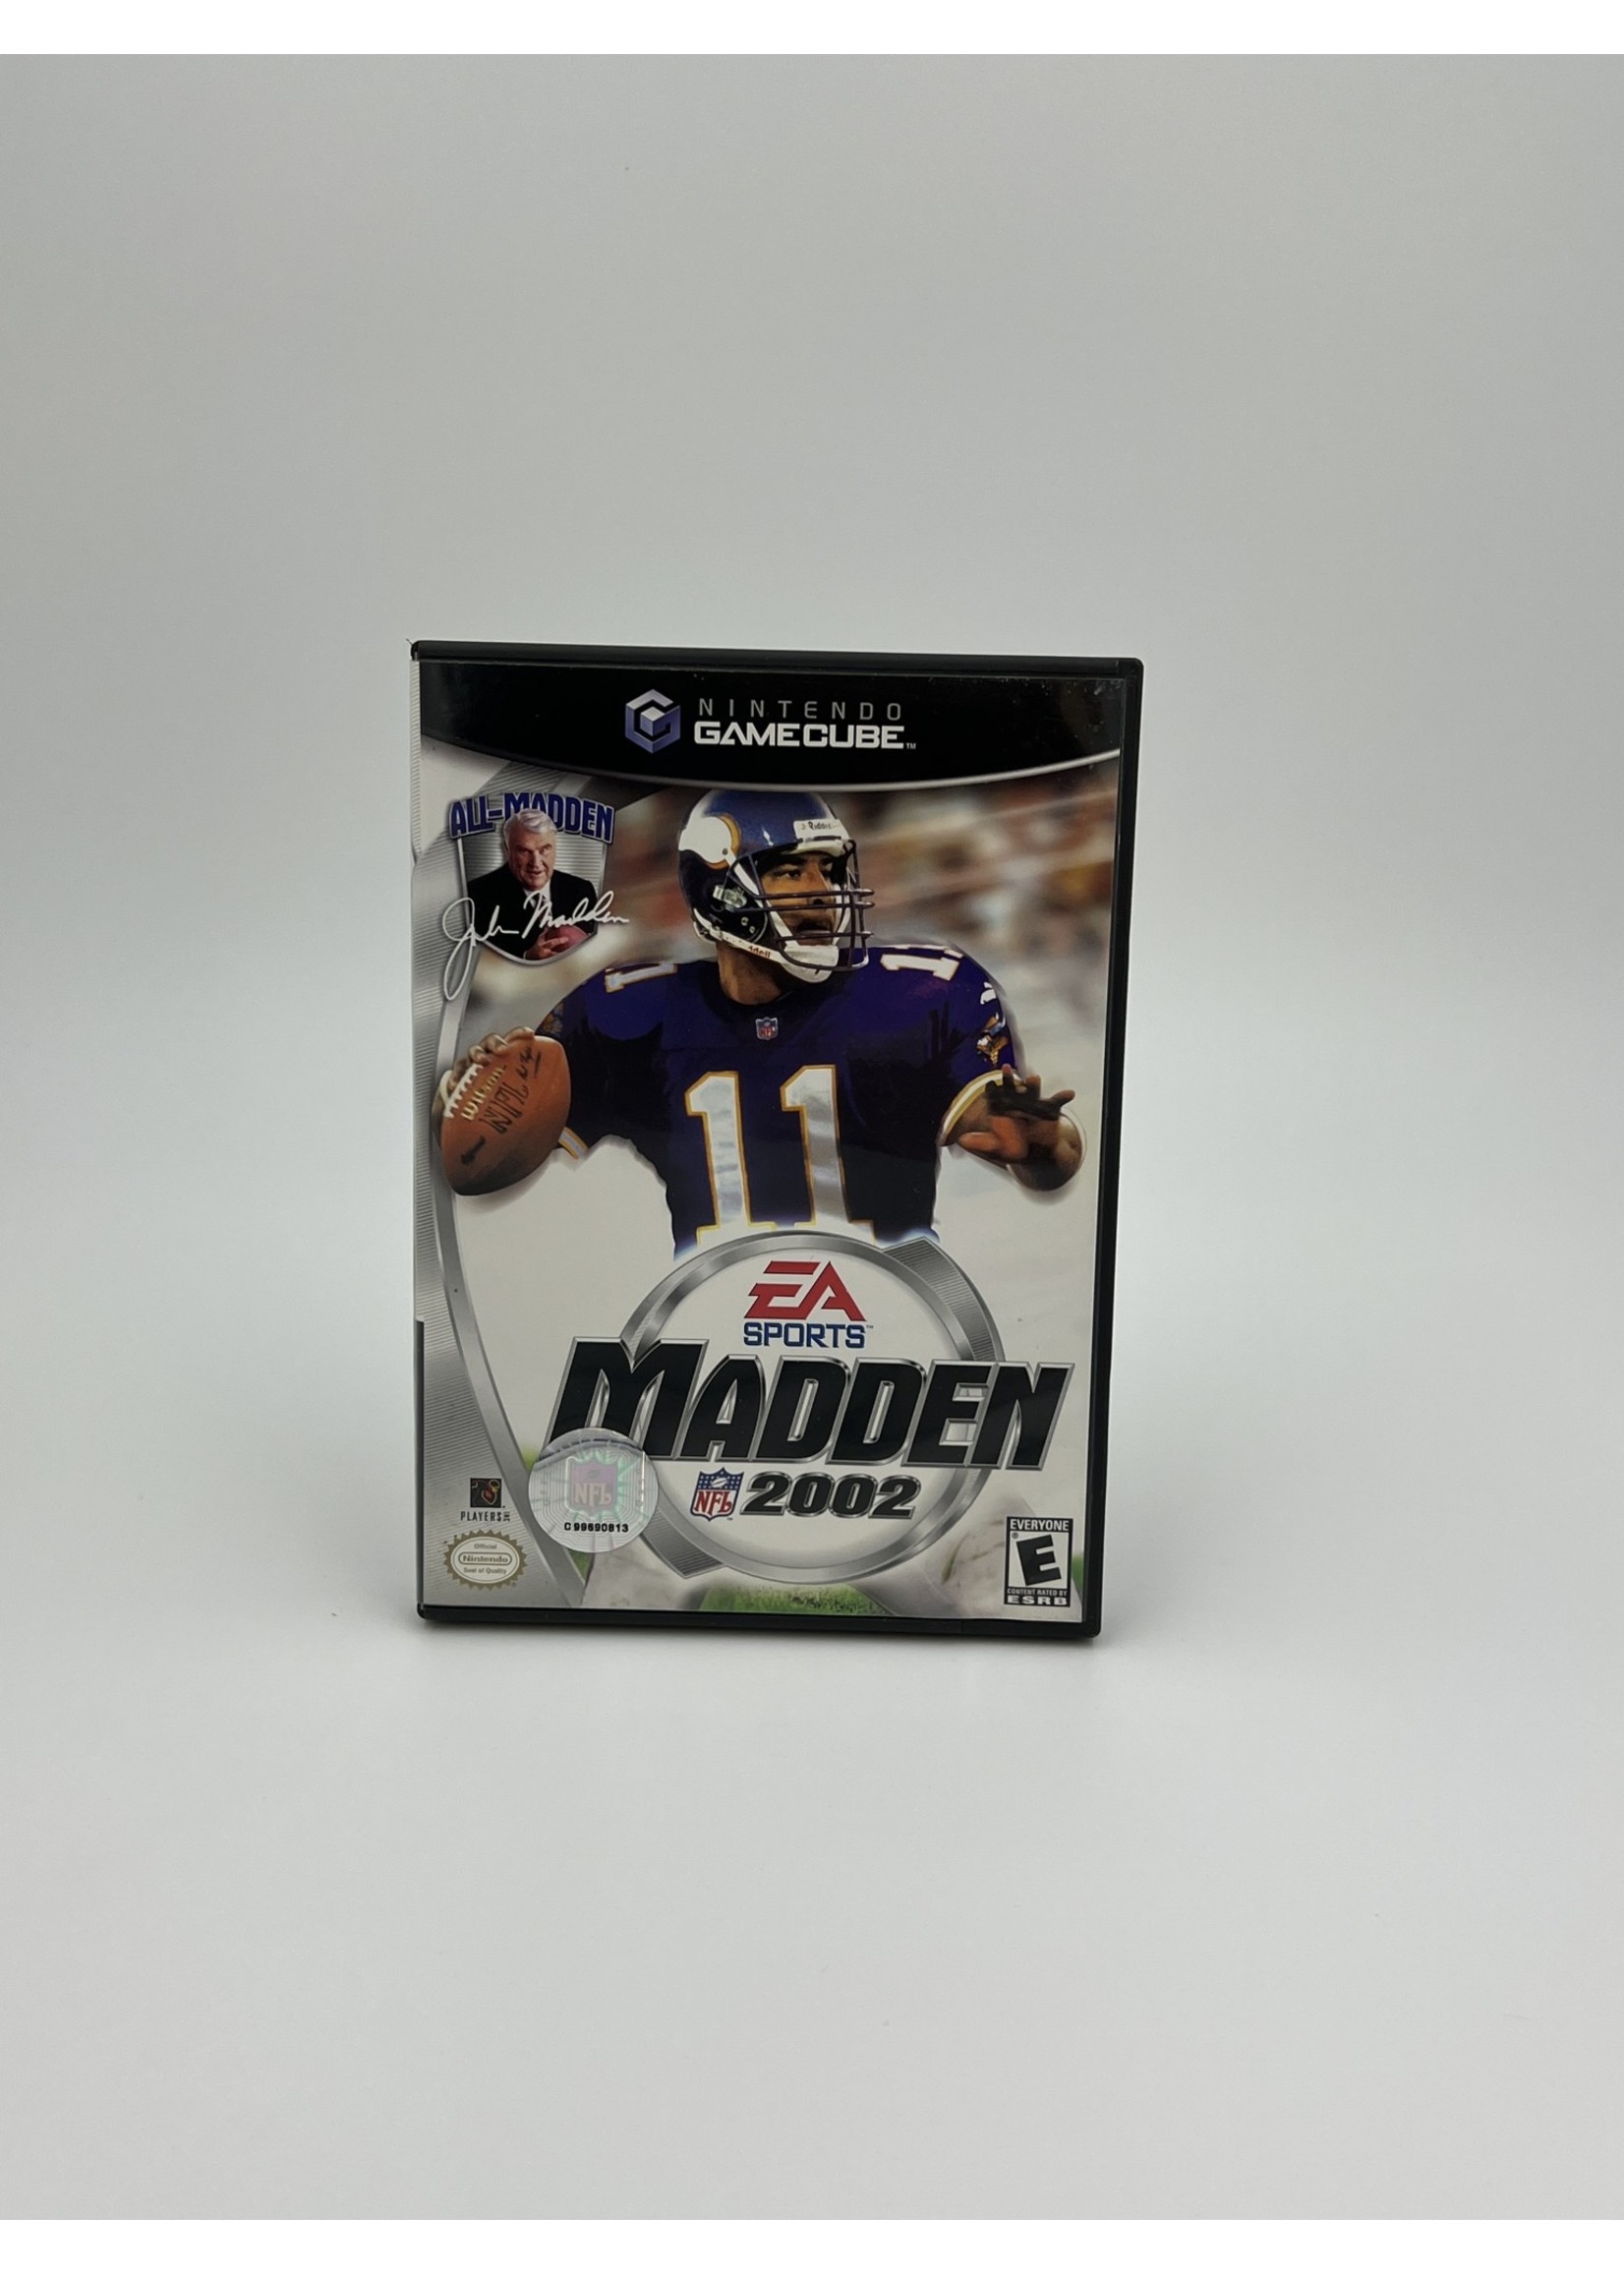 Nintendo Madden 2002 Gamecube